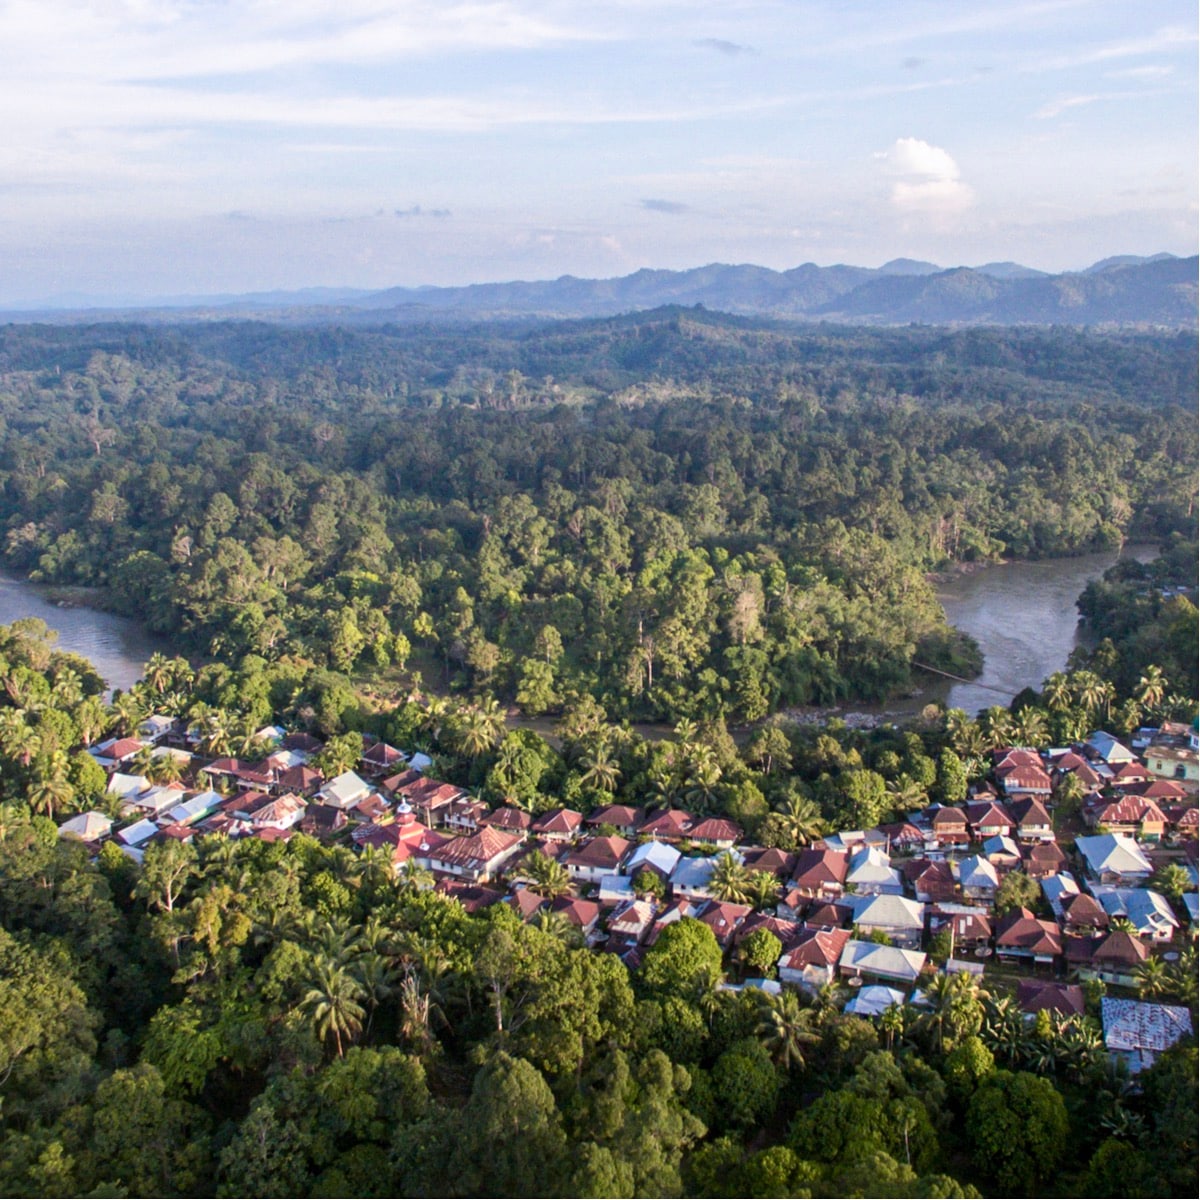 Sembilang National Park: Sumatra's Wildlife Sanctuary